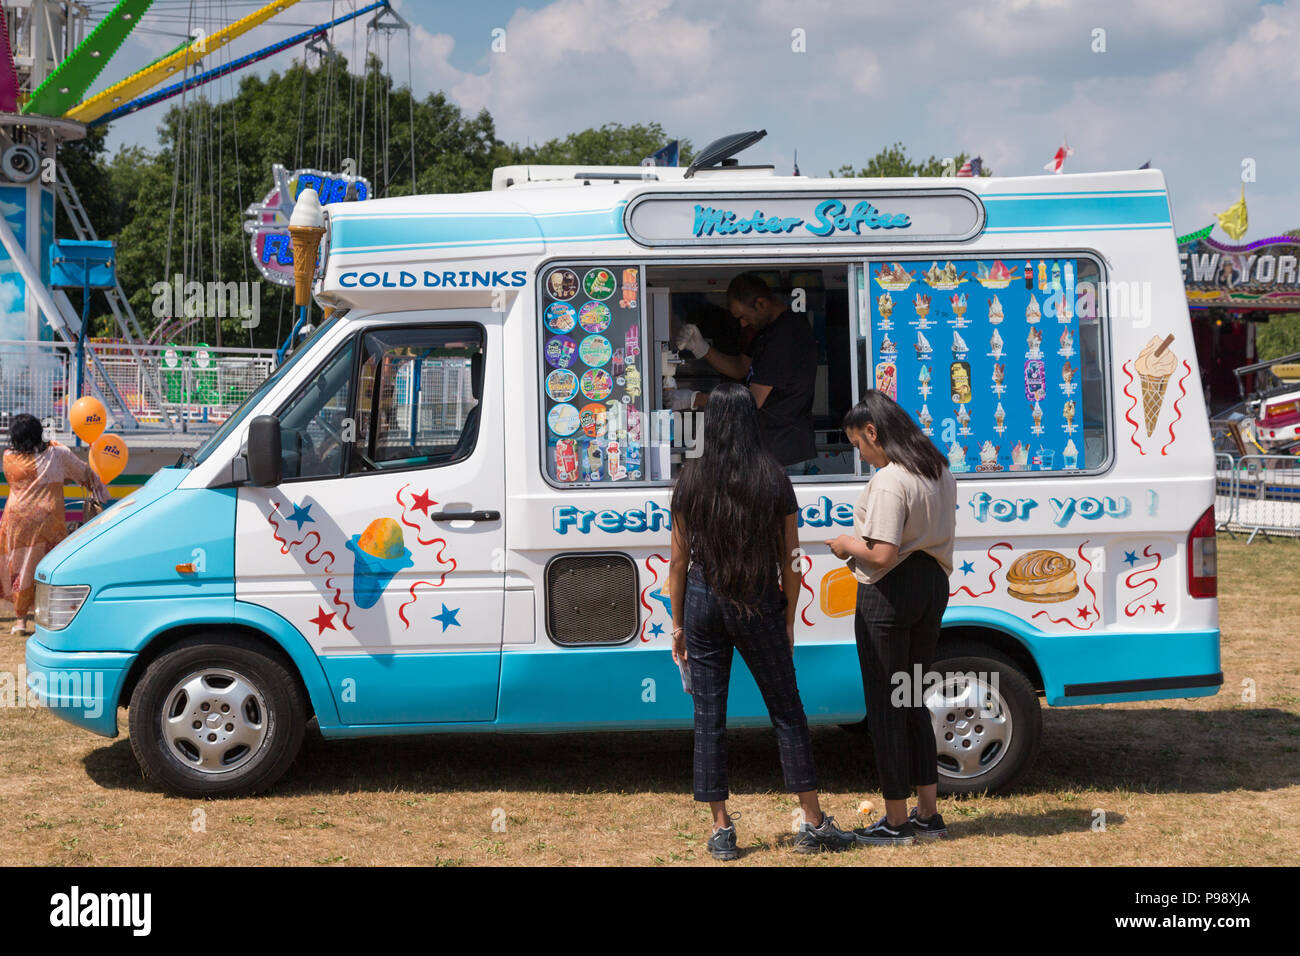 Ice Cream van verkaufen ices zu Britisch-asiatische Menschen in Birmingham  UK Park Stockfotografie - Alamy